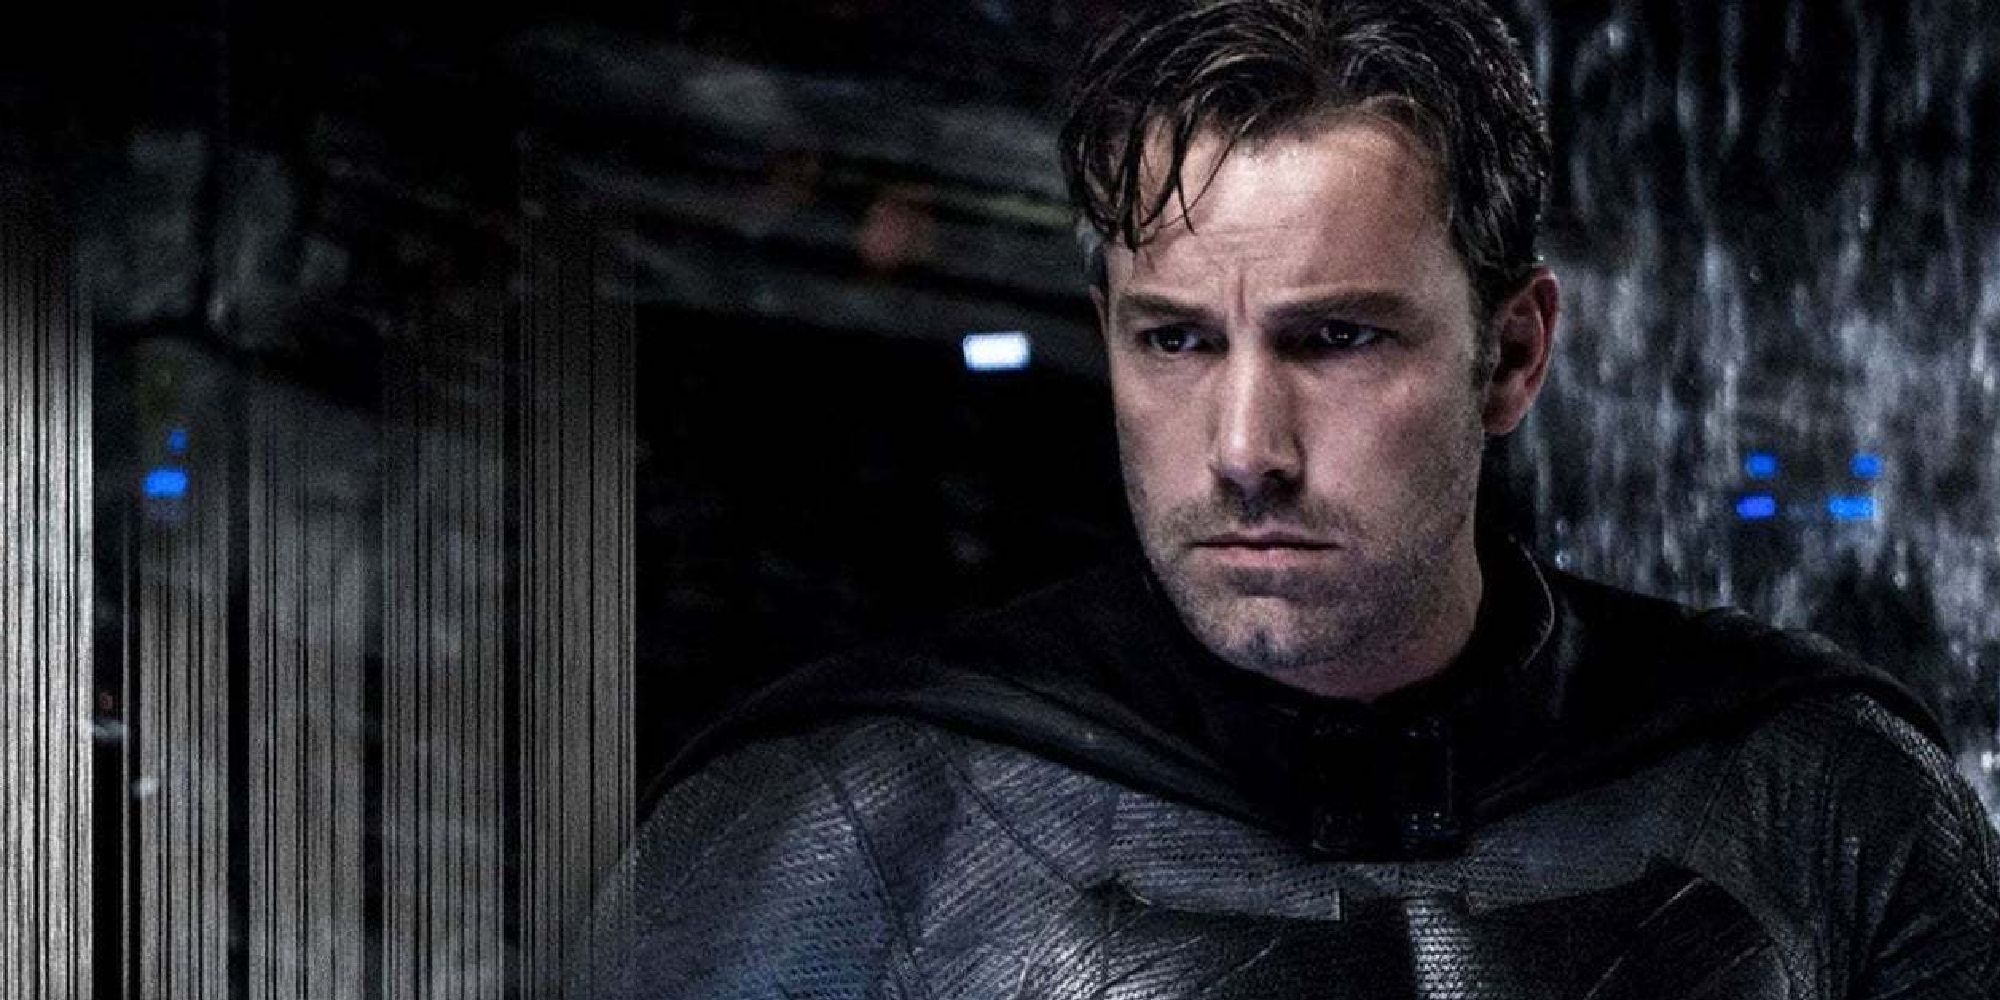 Ben Affleck to play Batman in 'Justice League'